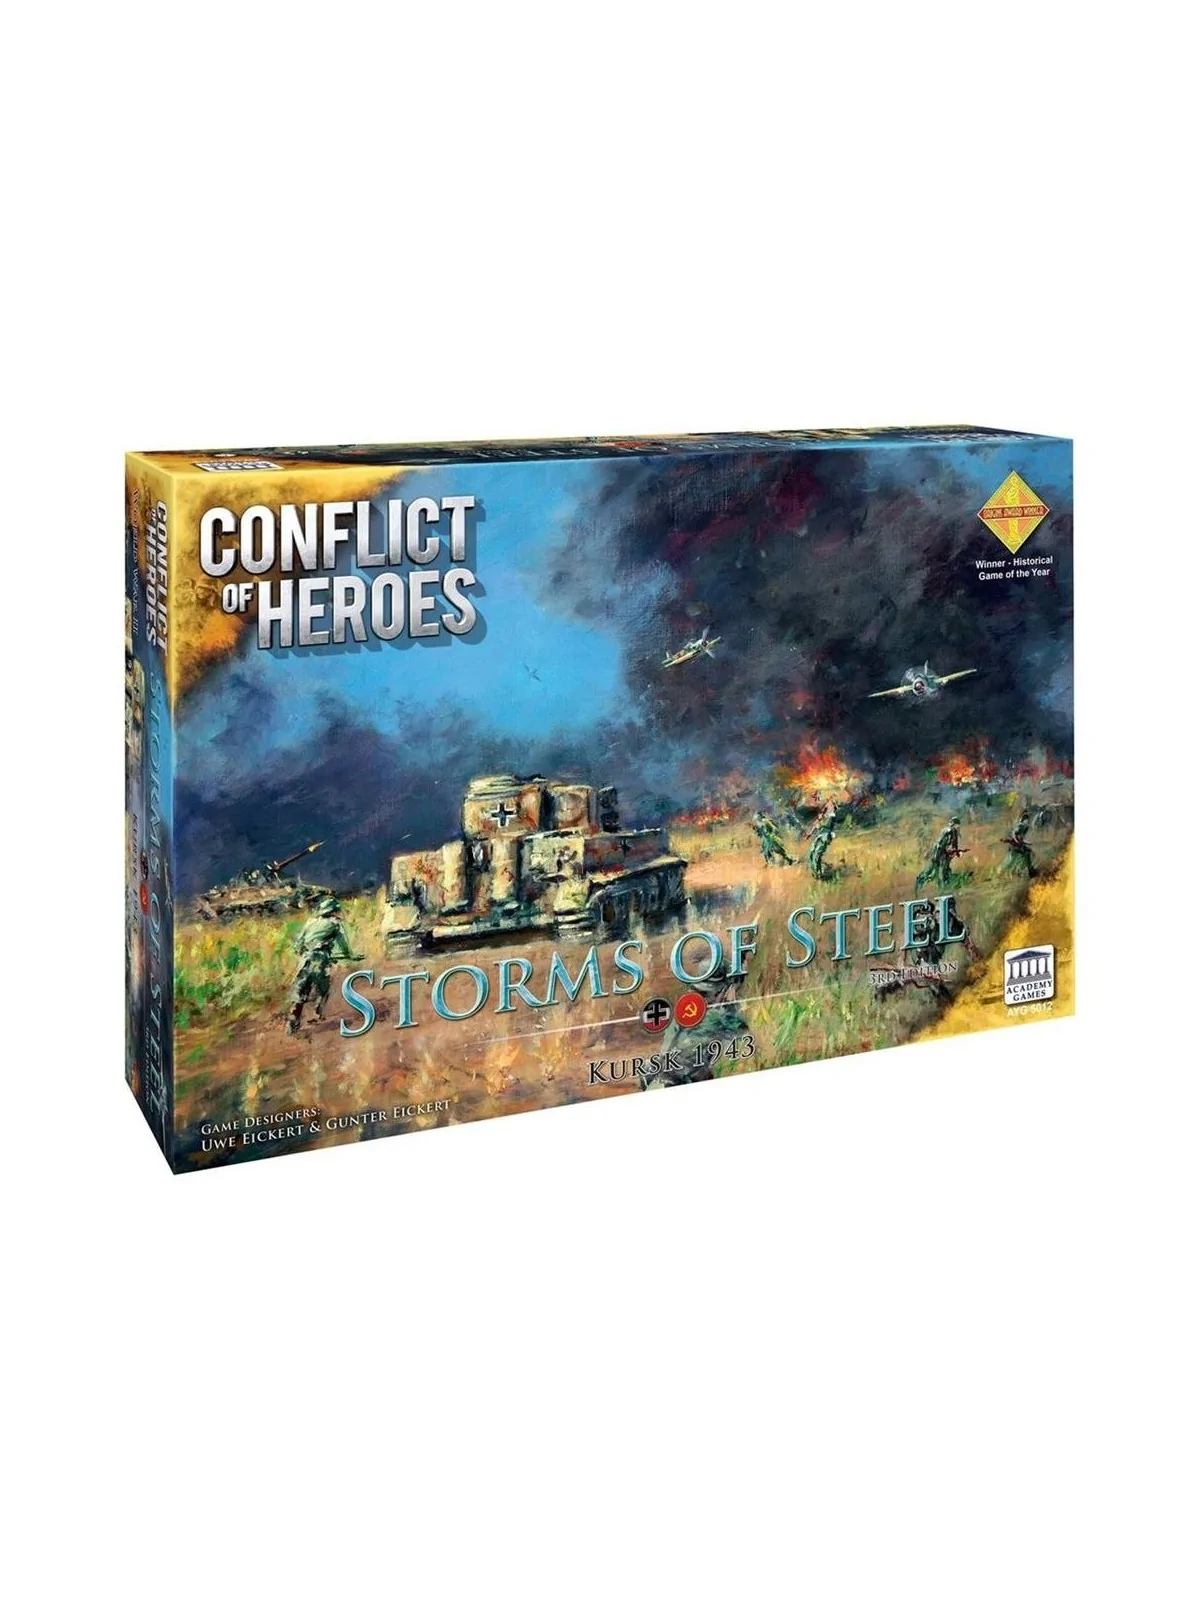 Comprar Conflict of Heroes Storms of Steel 3rd Ed (Inglés) barato al m